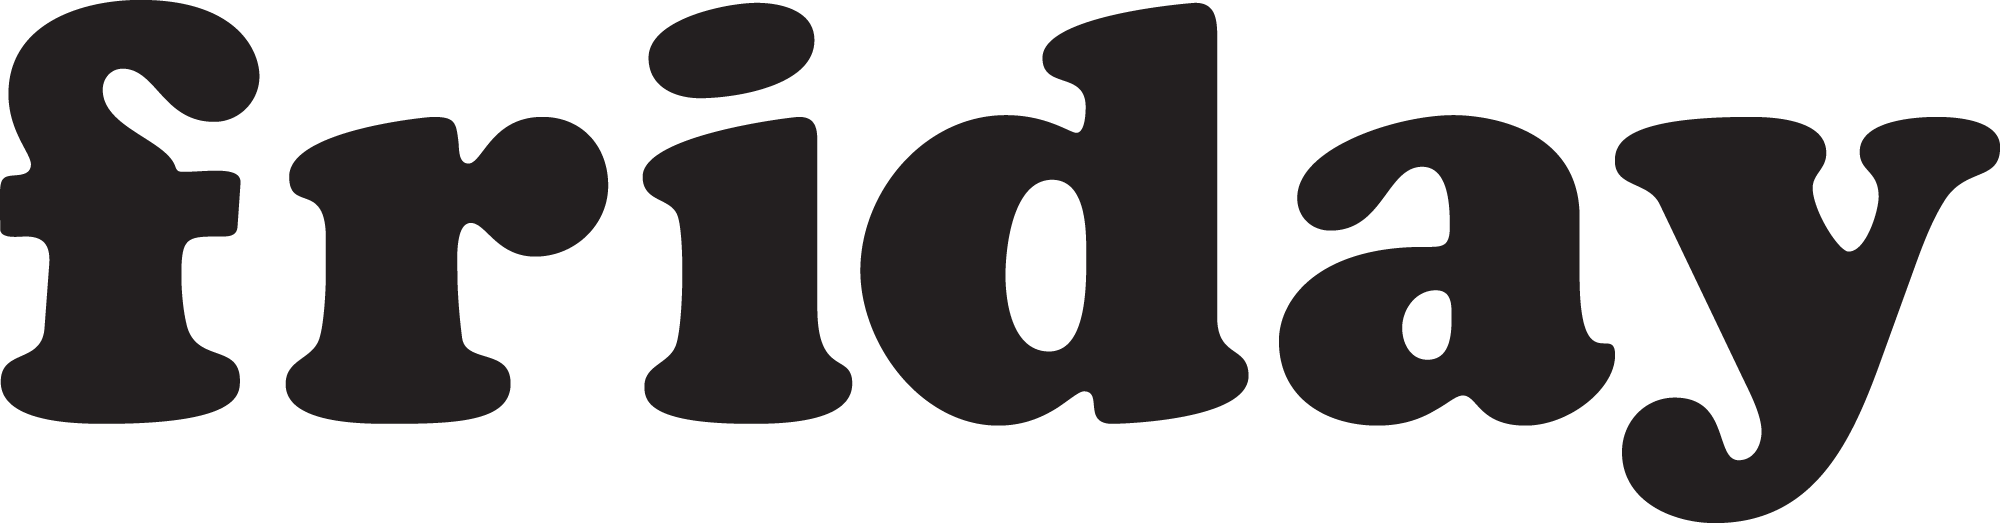 friday logo 6859